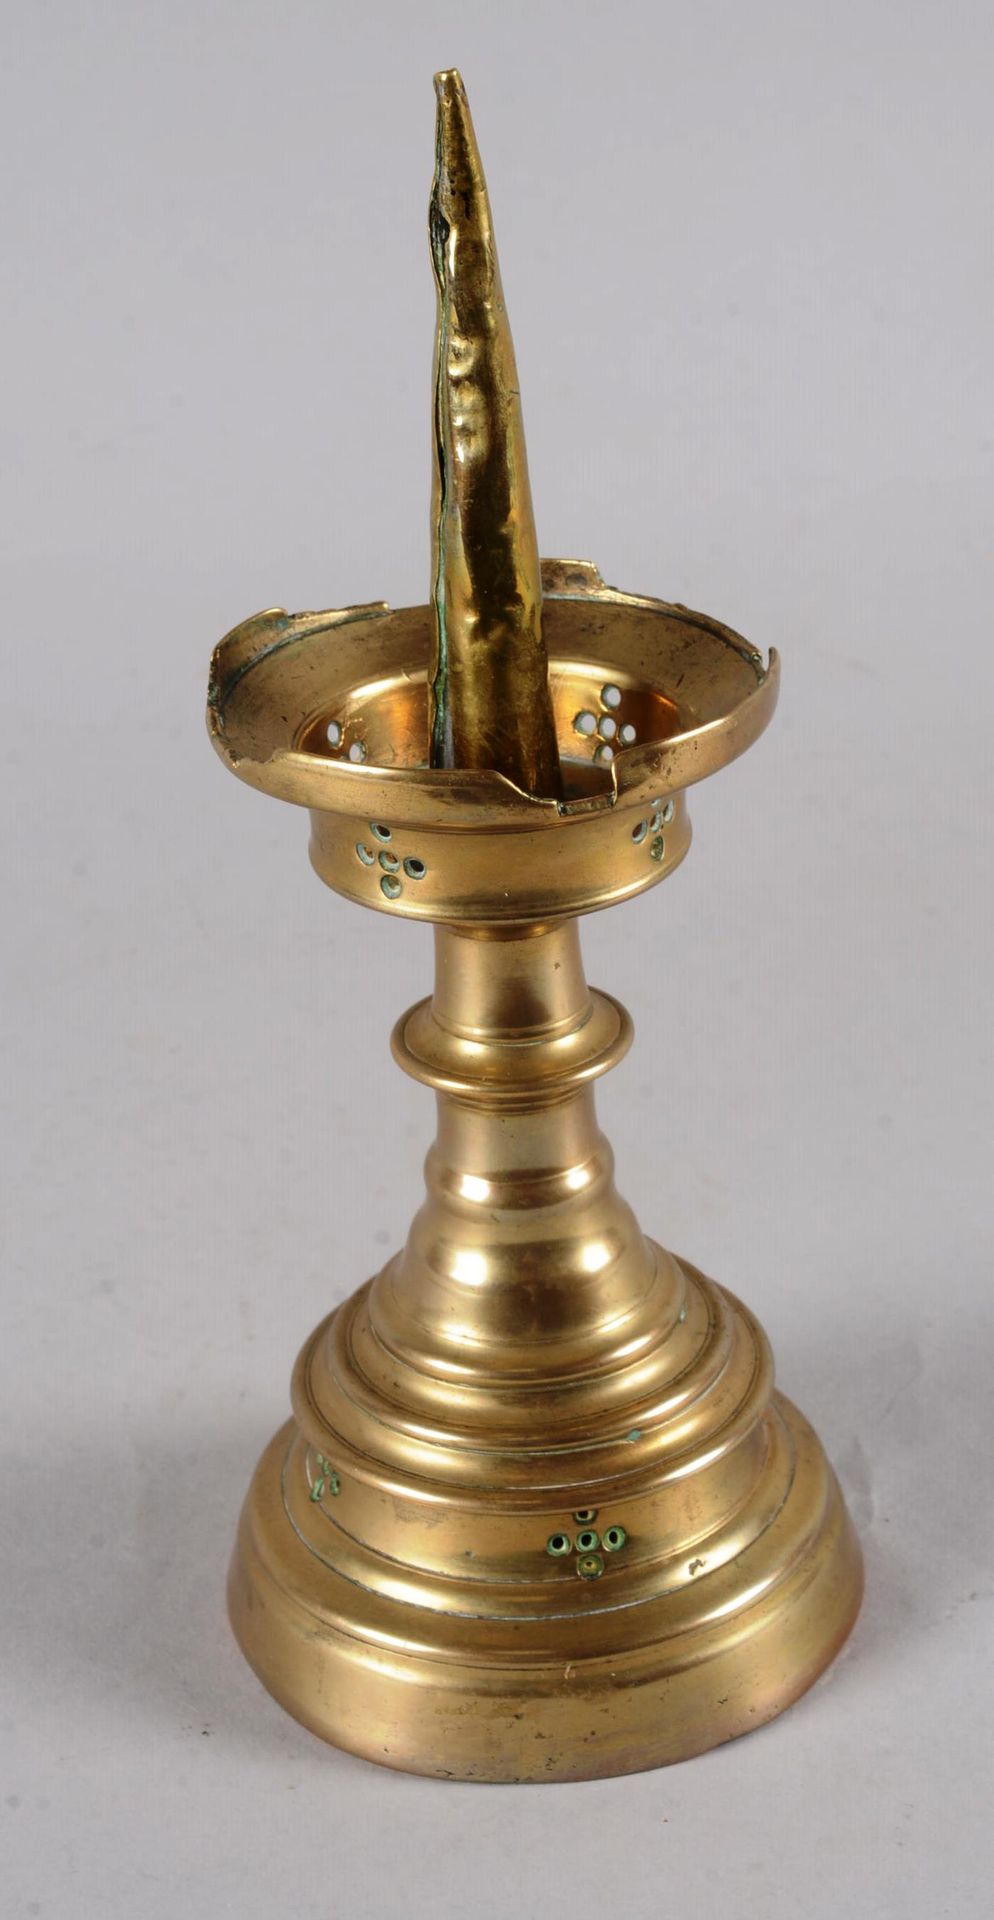 Pique cierge gothique 镀金铜的哥特式蜡烛棒。底座和圆形轴上装饰有圆形穿孔的十字架。

高：23厘米